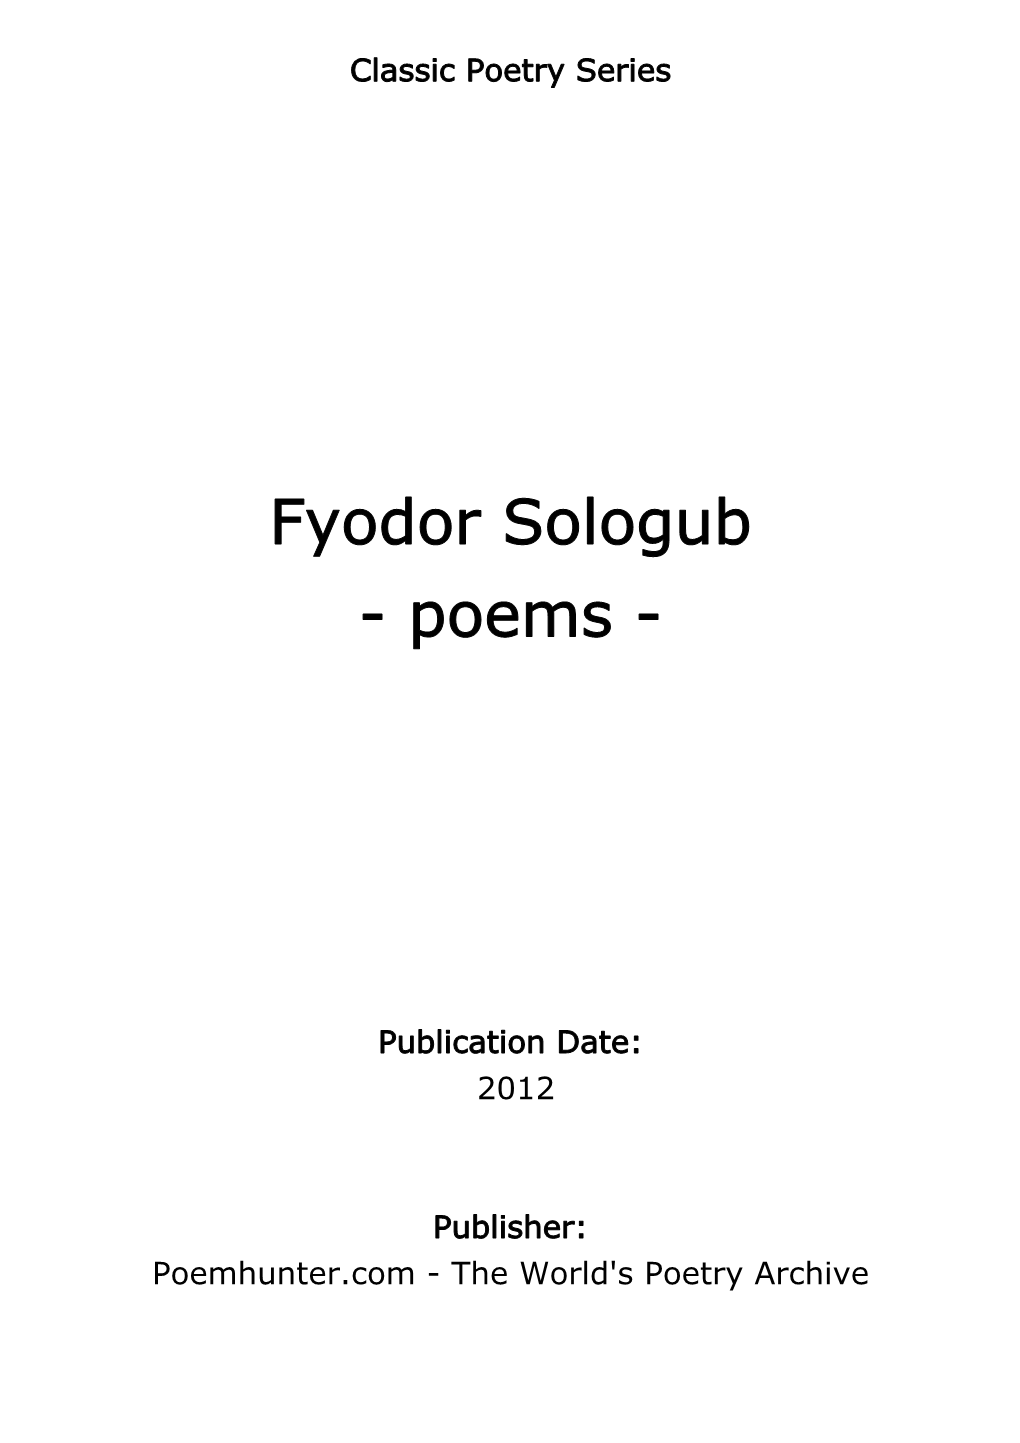 Fyodor Sologub - Poems